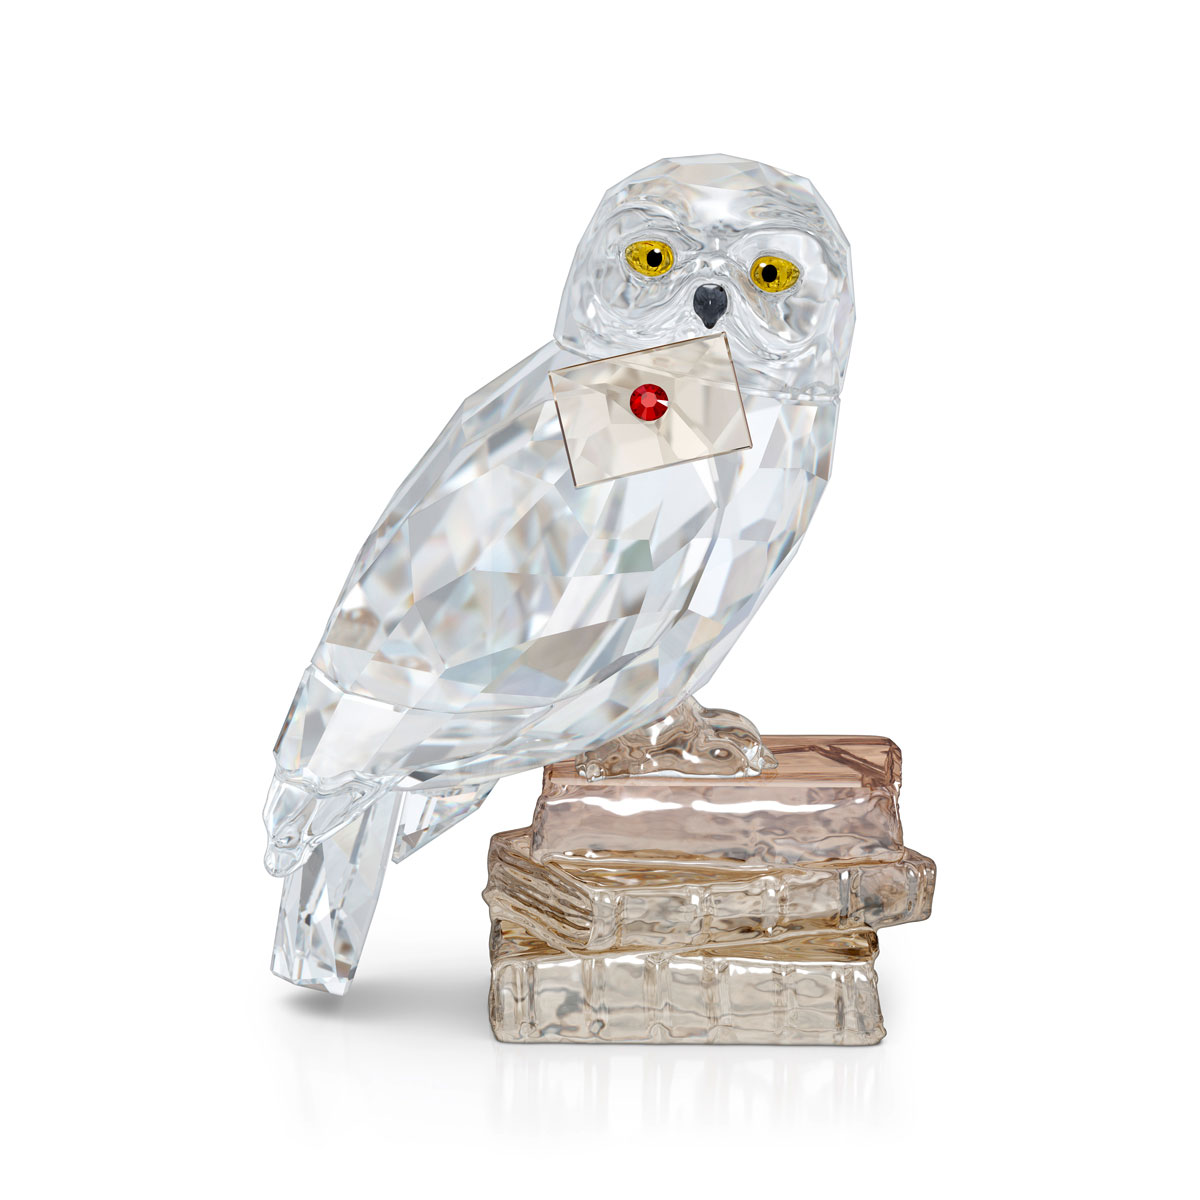 Swarovski Harry Potter's Owl, Hedwig